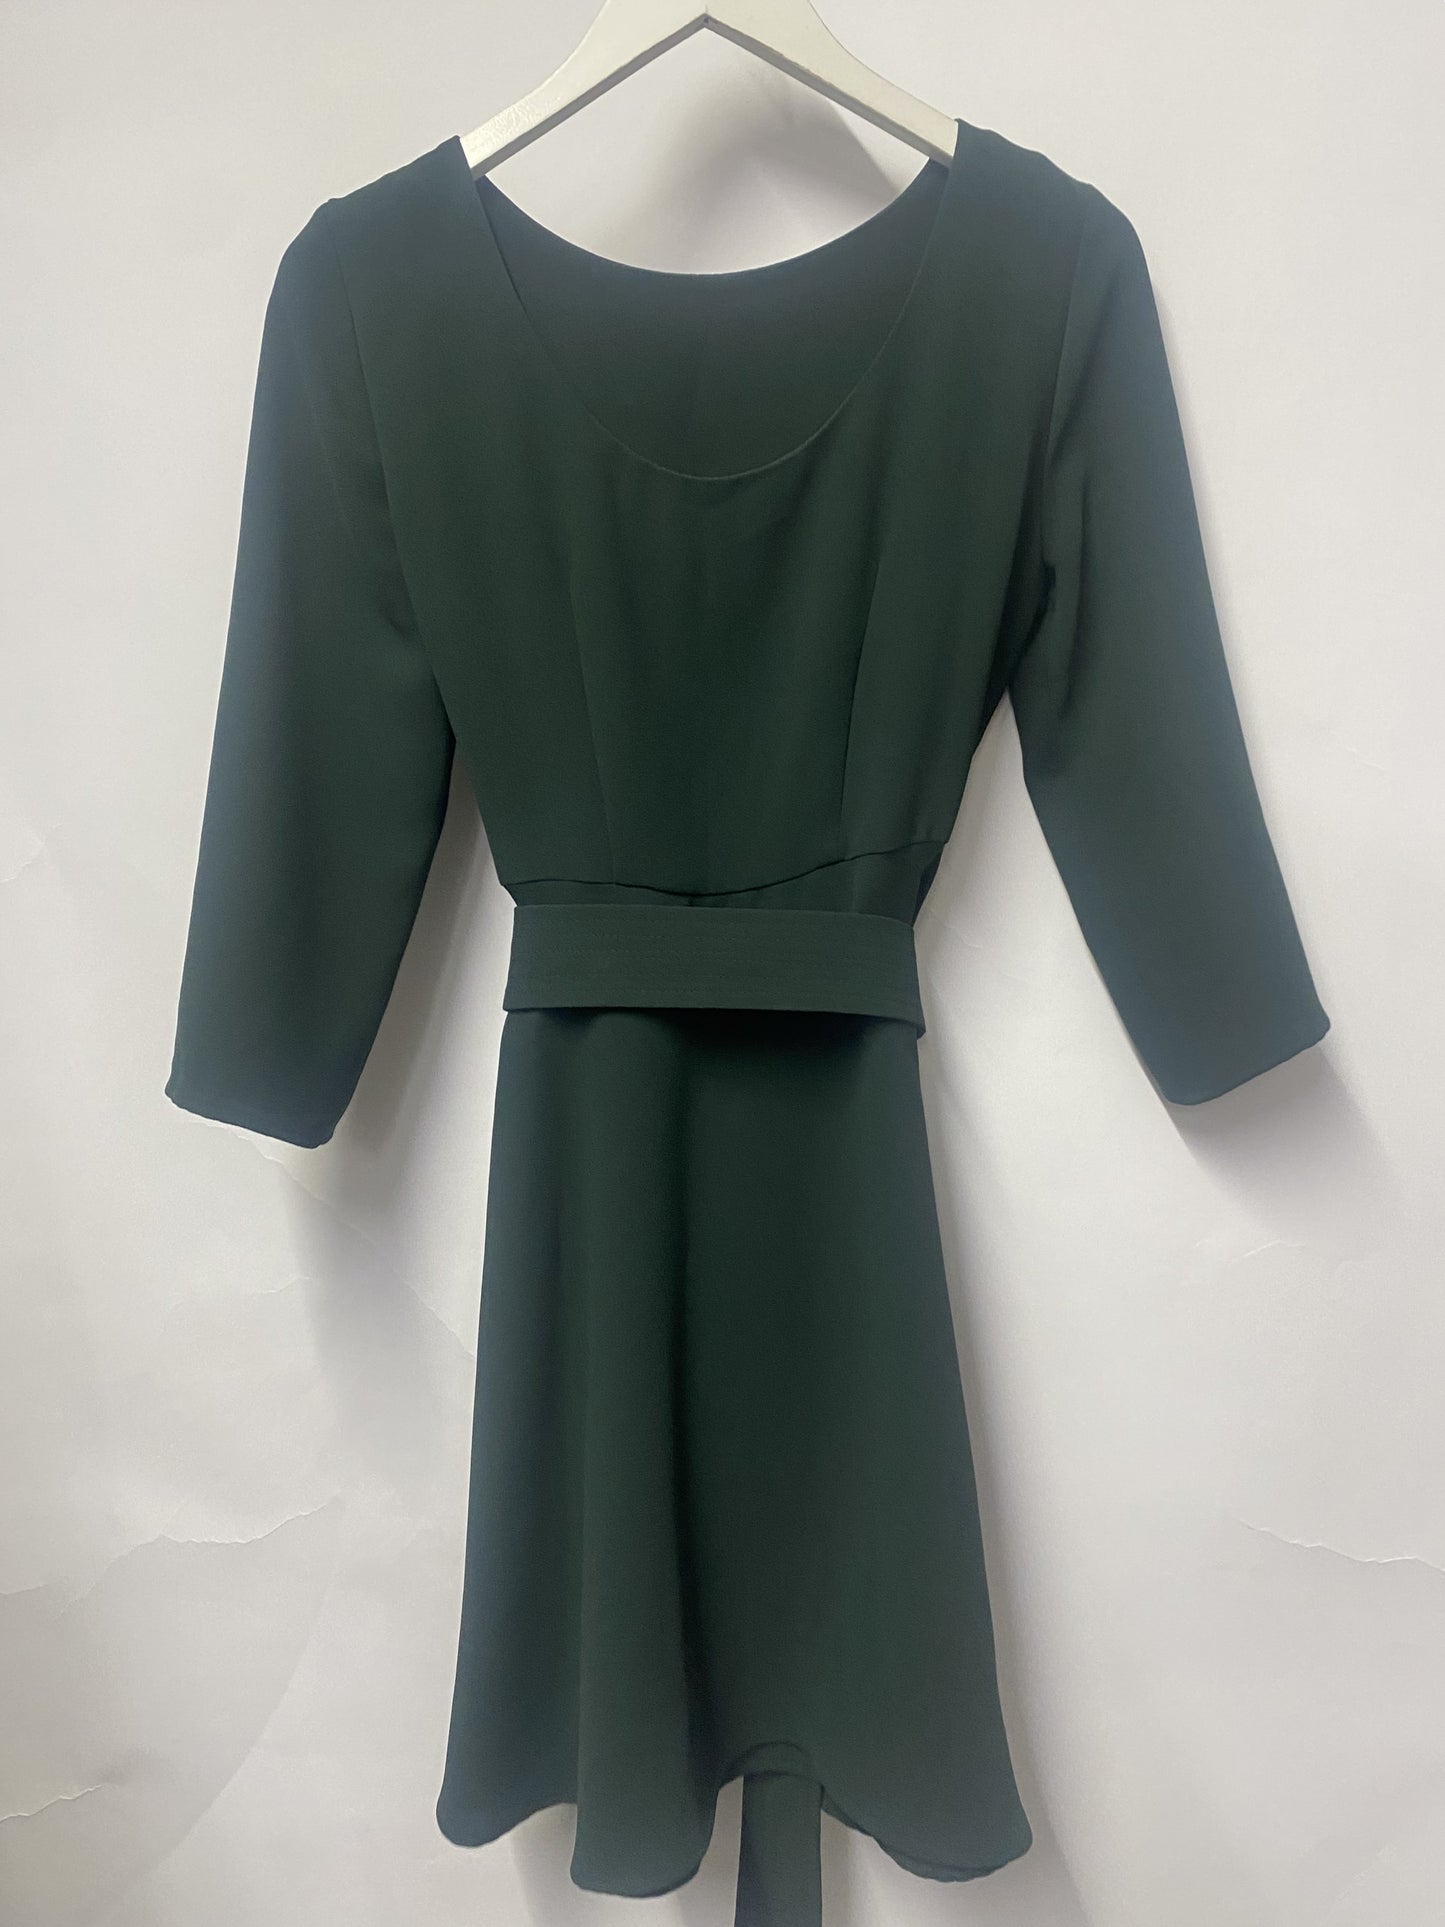 Claudie Pierlot Green A-line Belted Dress 8